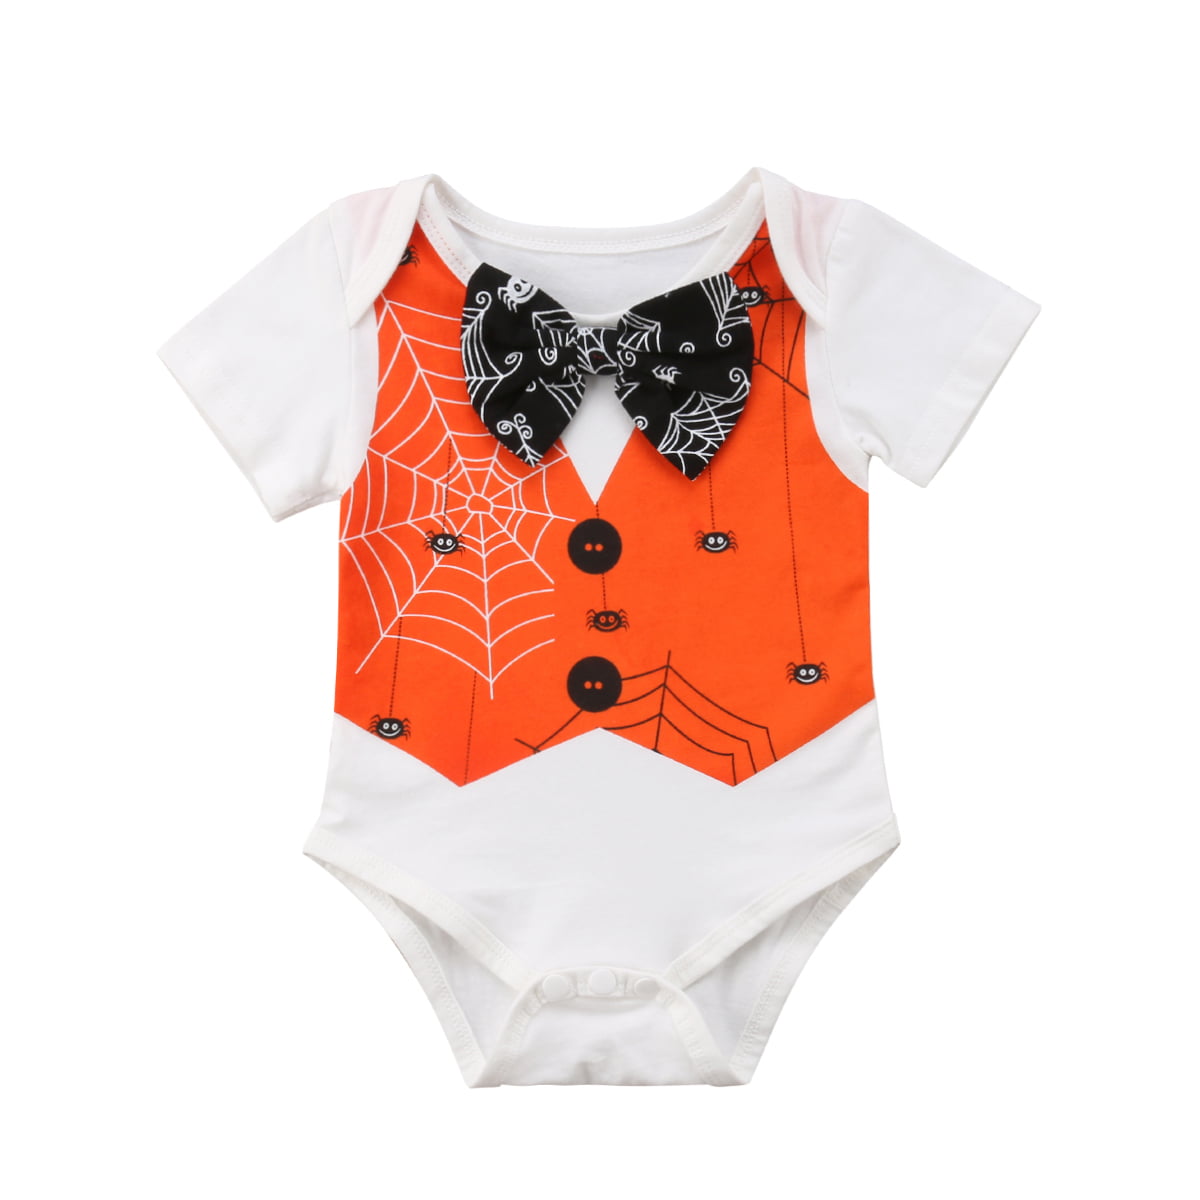 24m romper Gift Baby Spider Costume 1st Halloween Vest Bodysuit Outfit Newborn